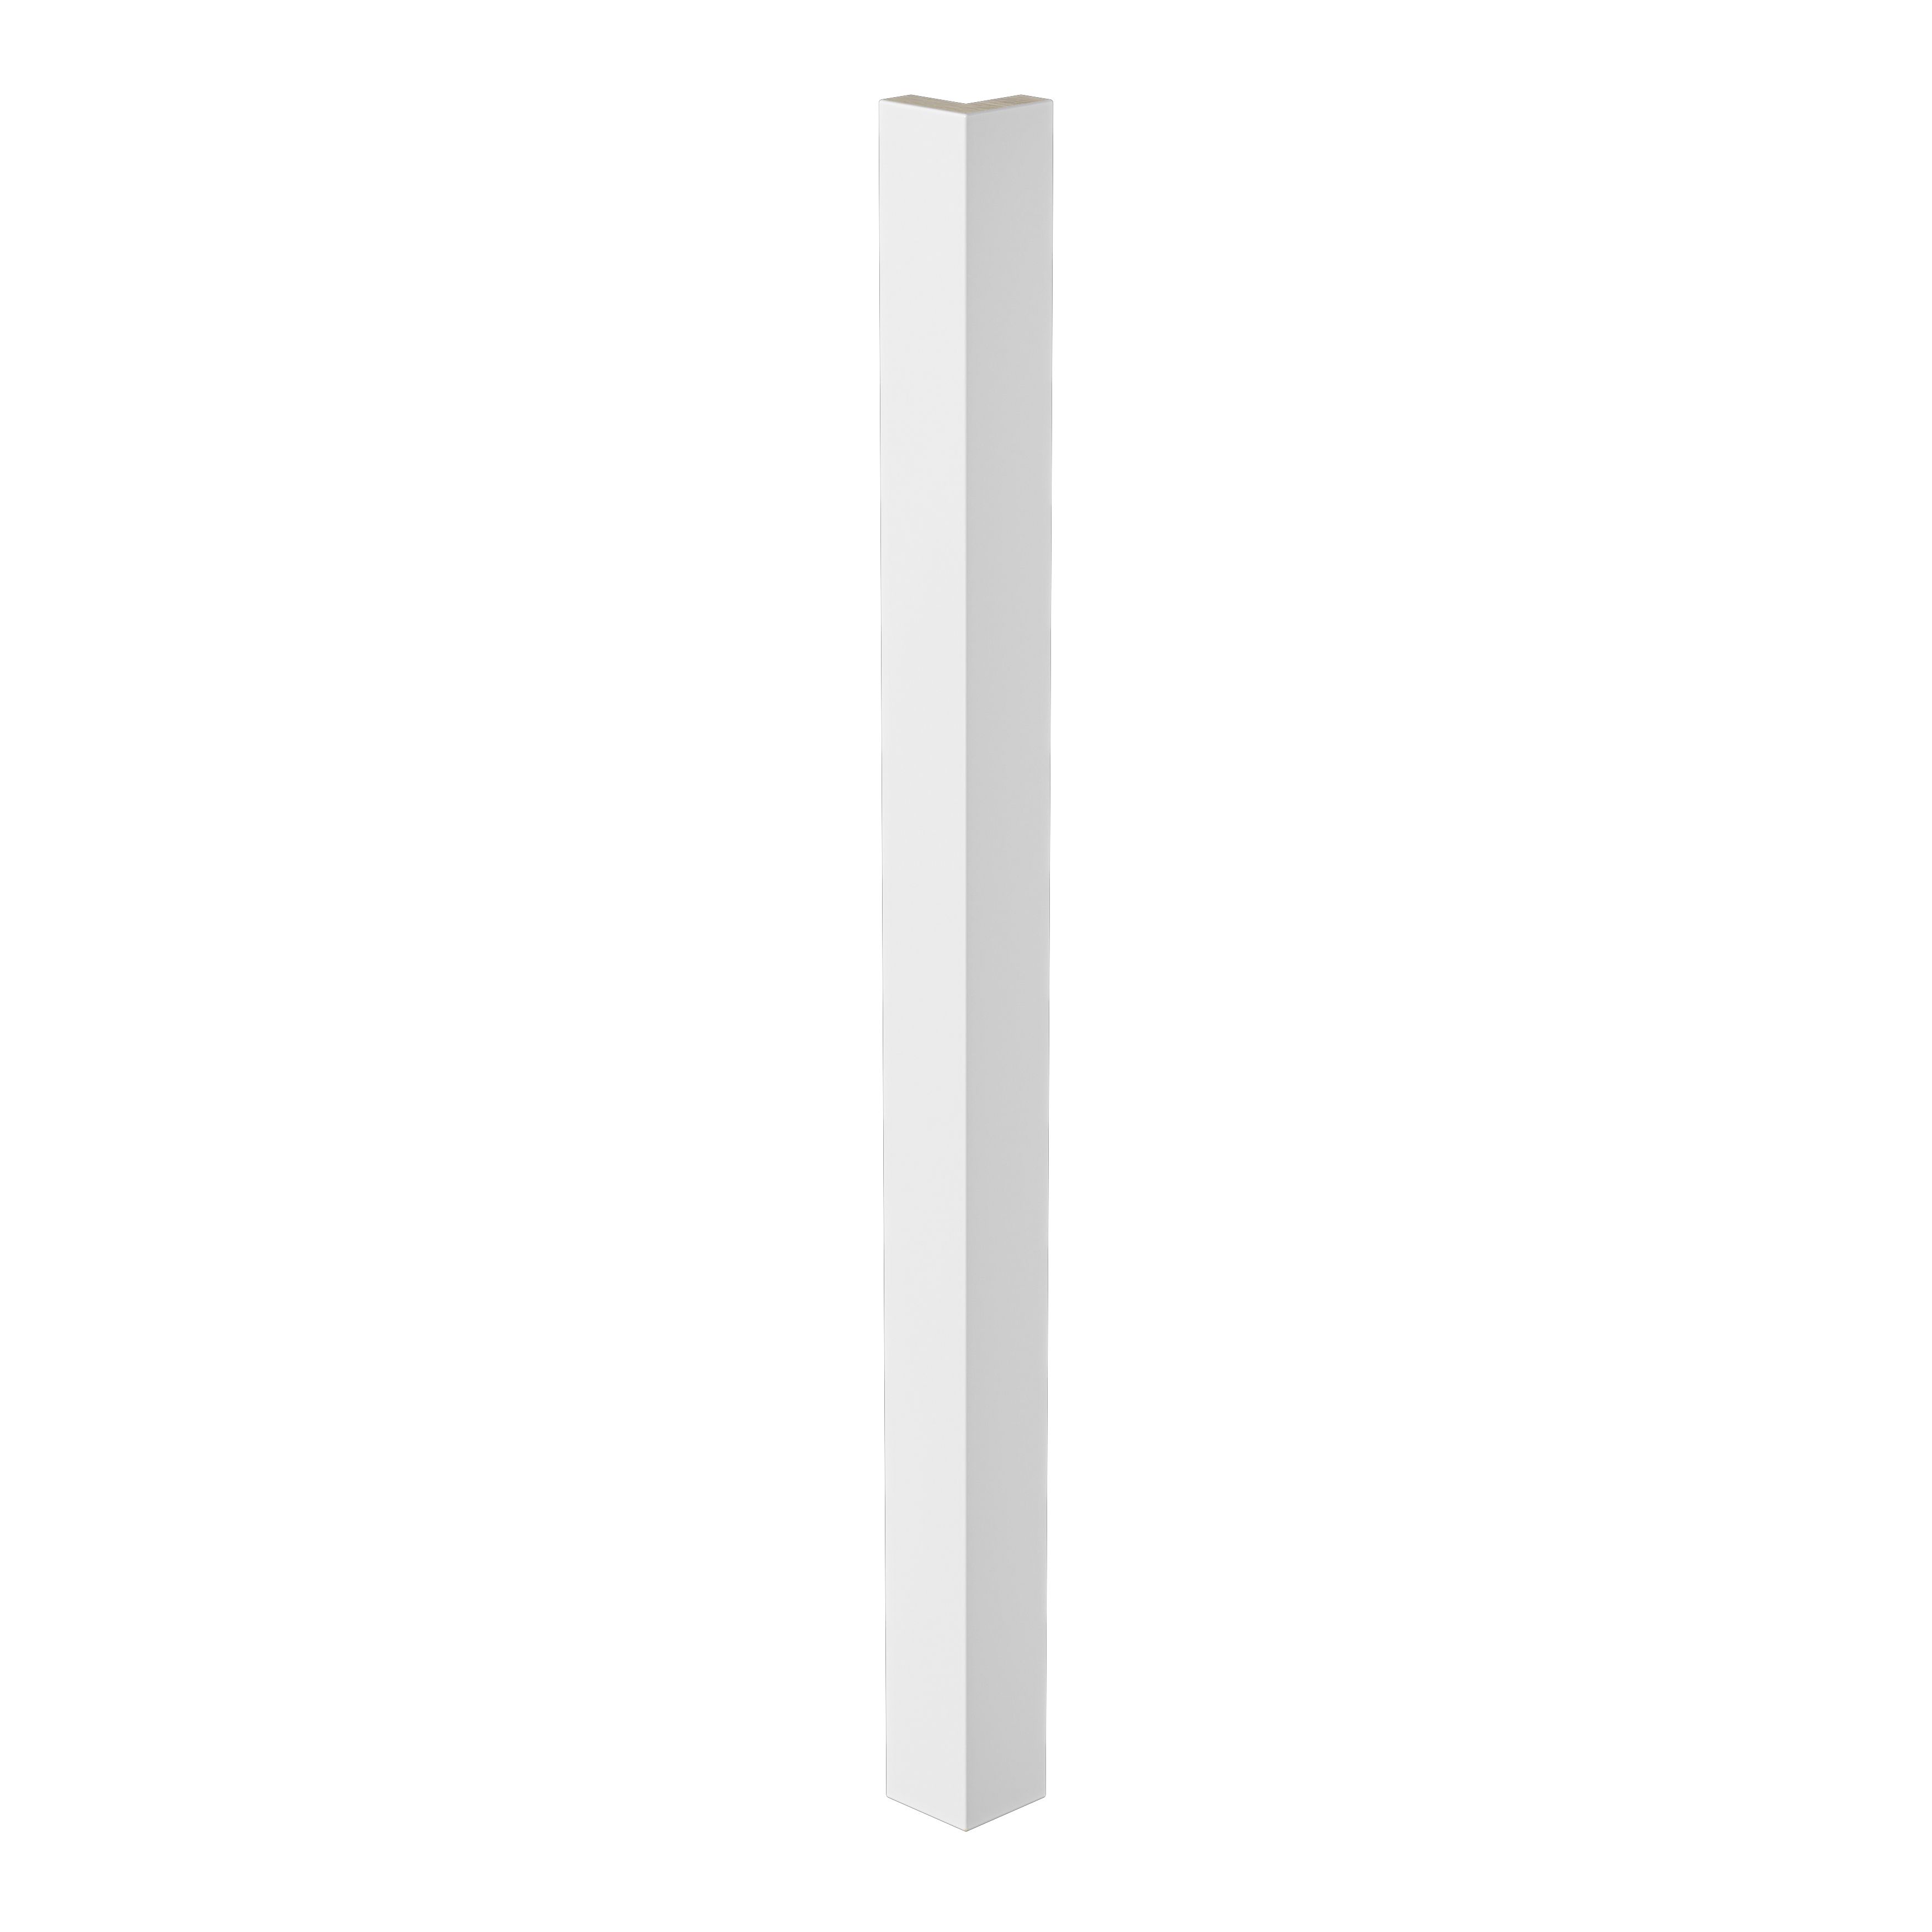 GoodHome Stevia Innovo handleless gloss white slab Standard Corner post, (W)48mm (H)715mm